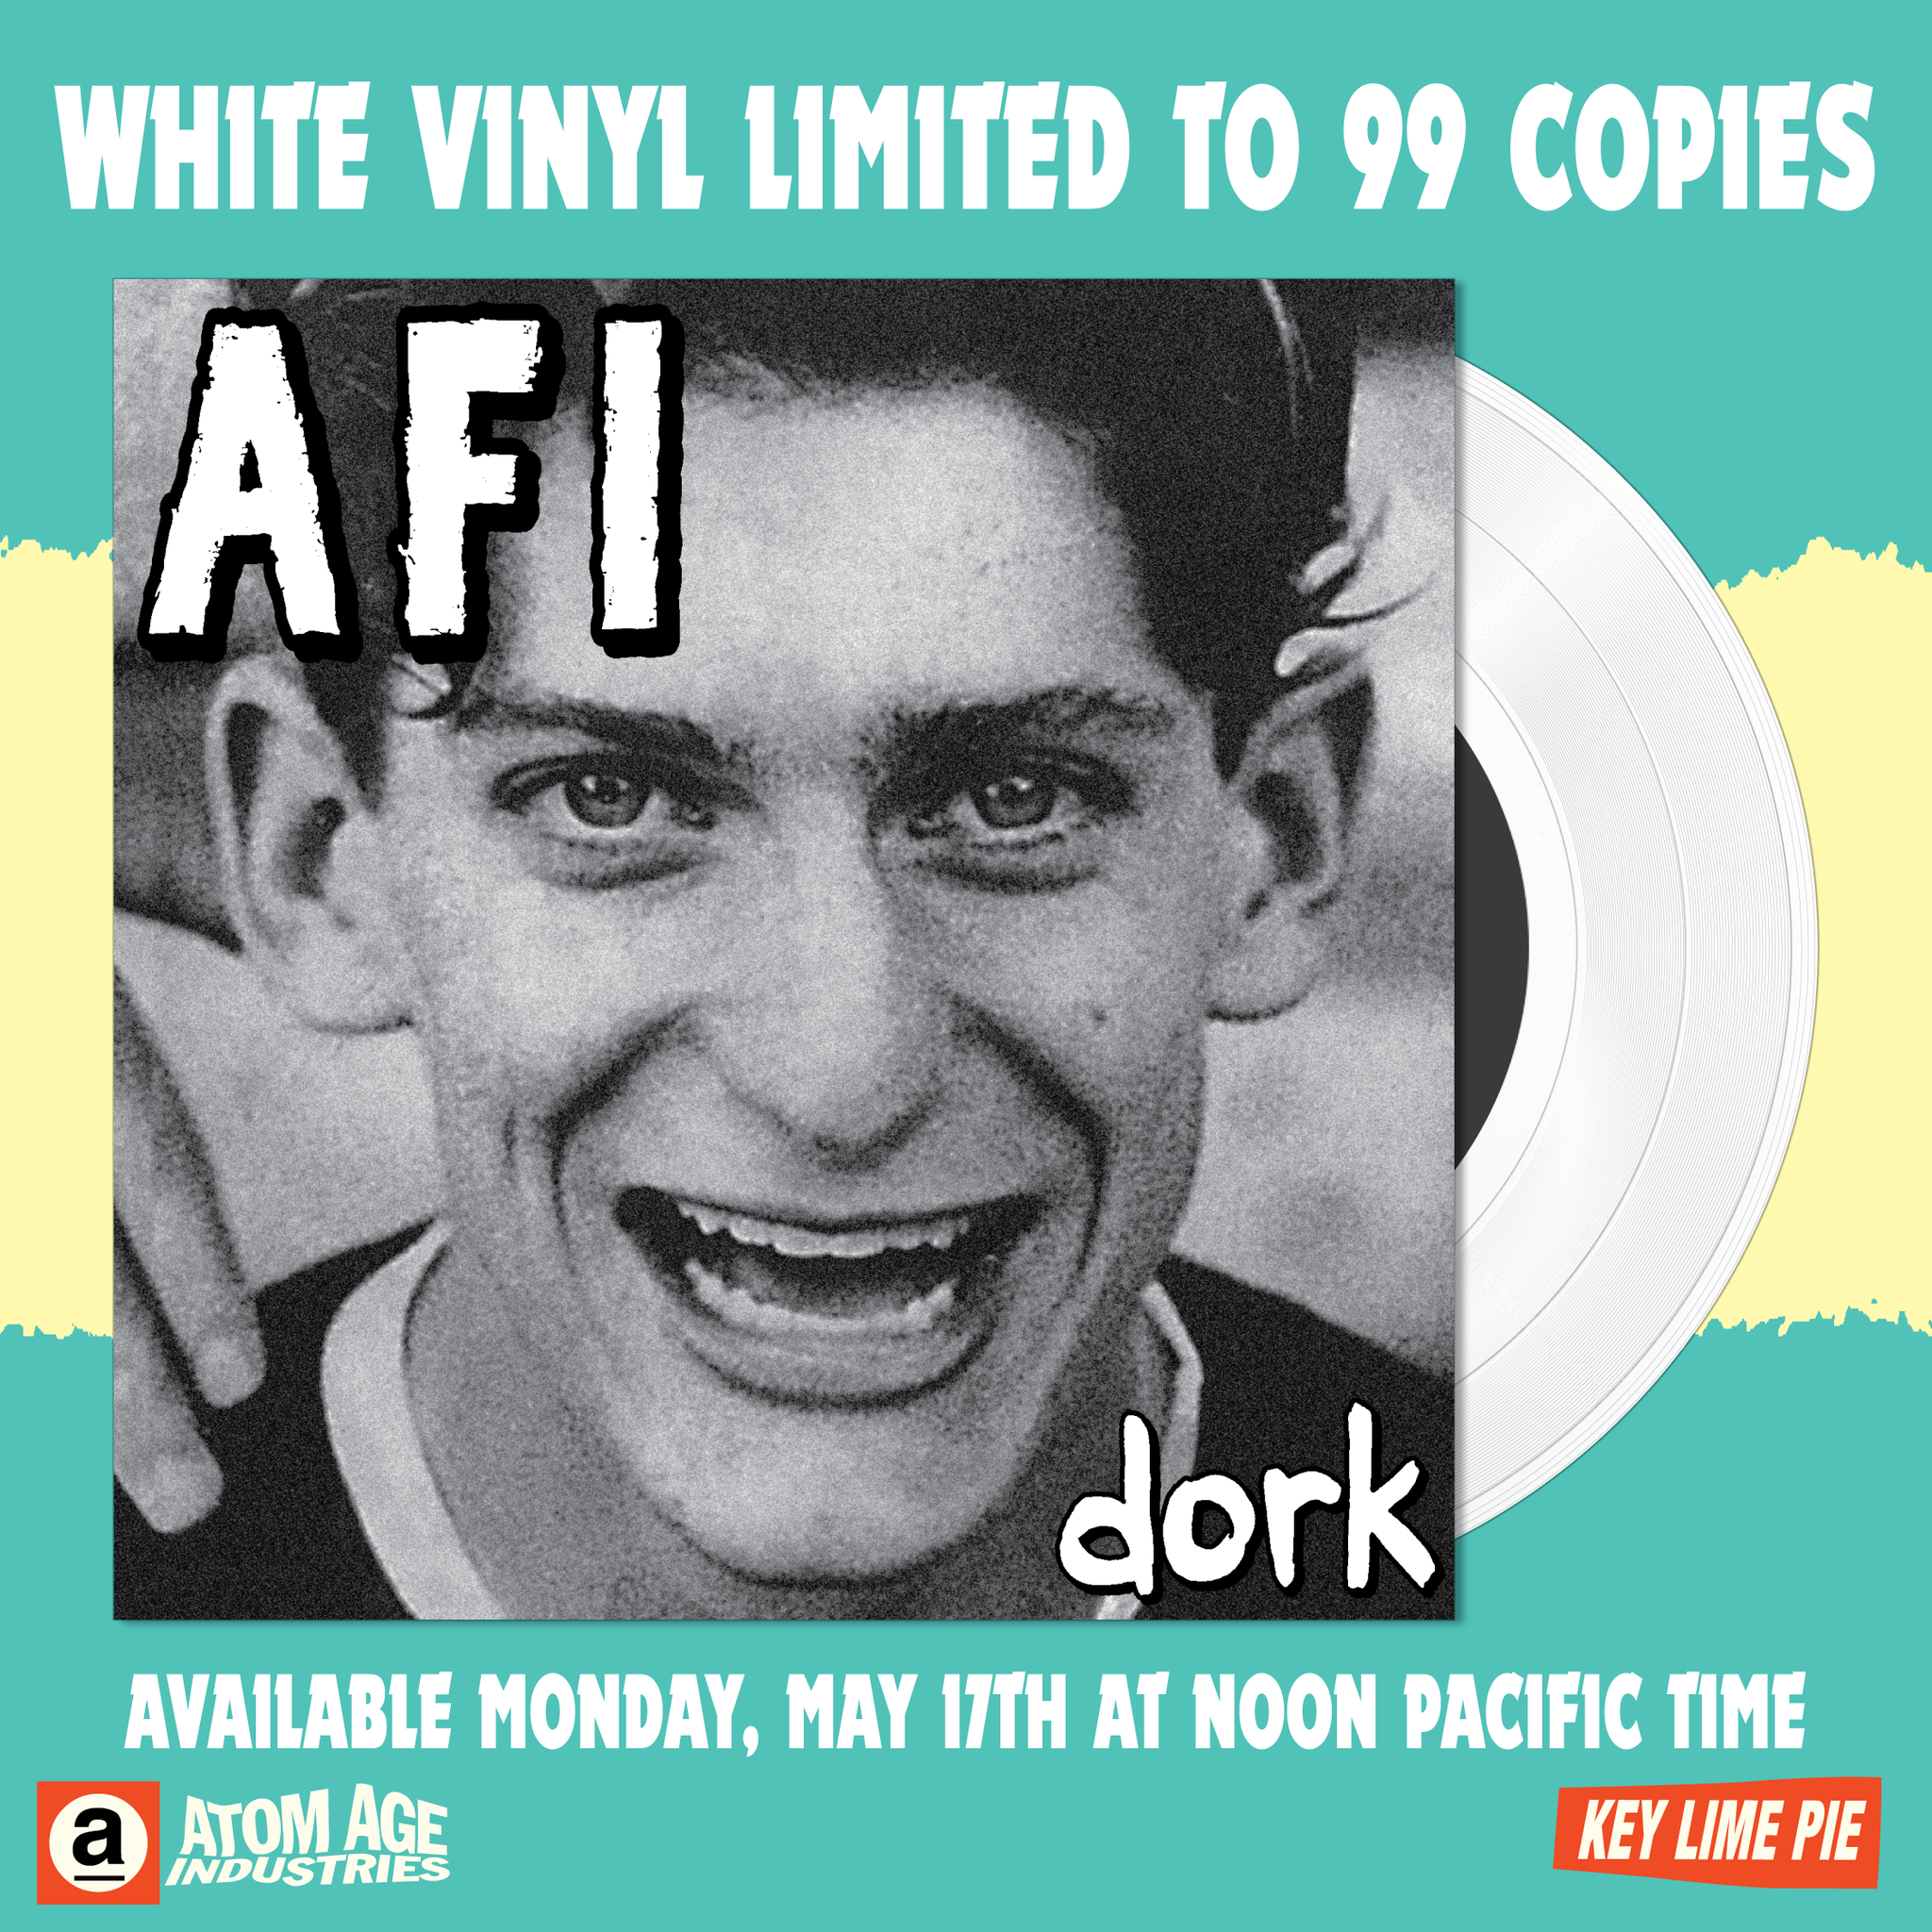 AFI: "DORK" WHITE VINYL LIMITED EDITION 7" SINGLE